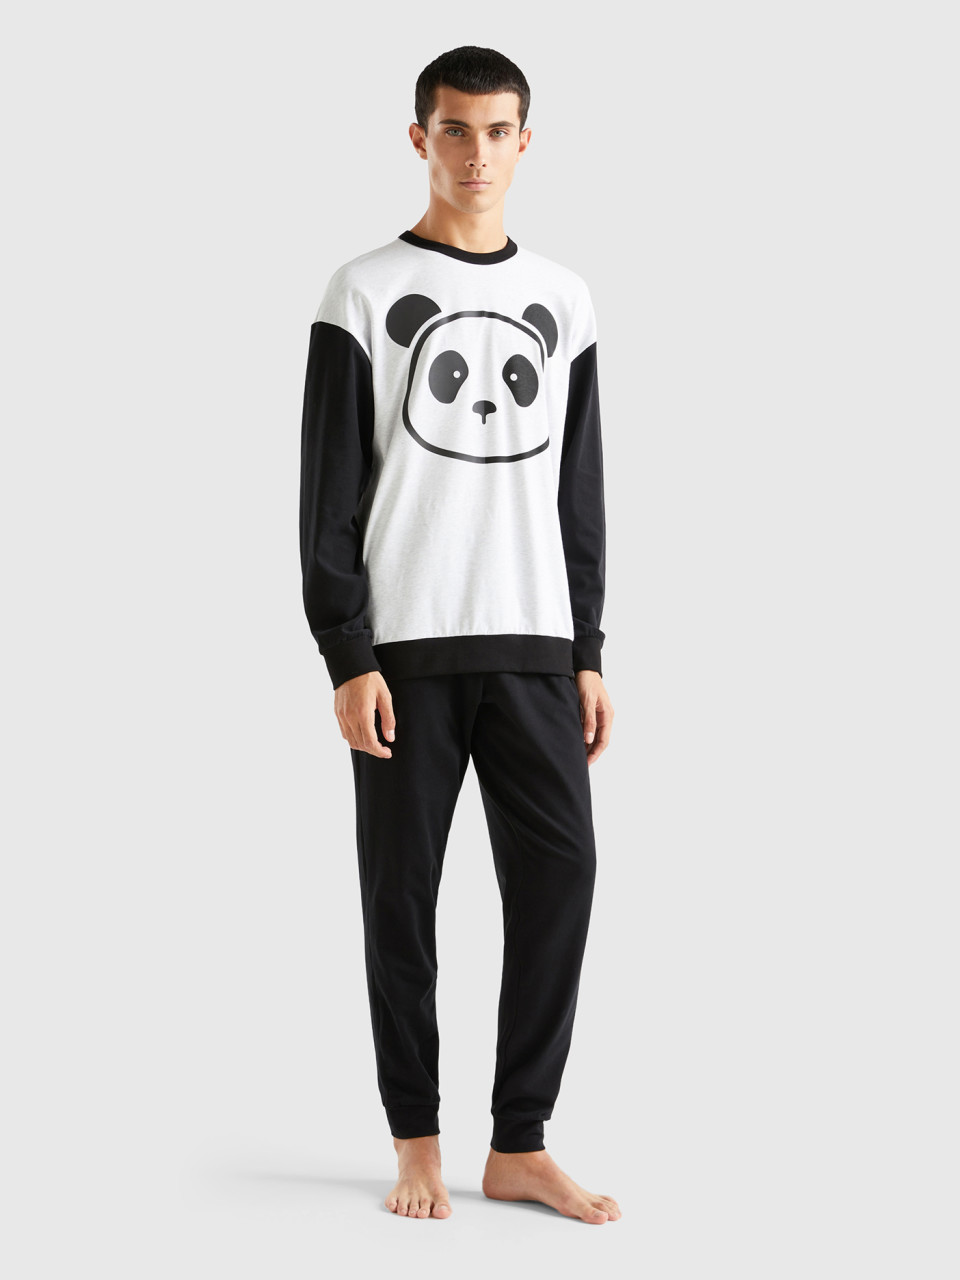 Benetton, Two-tone Pyjamas With Panda Print, Multi-color, Men